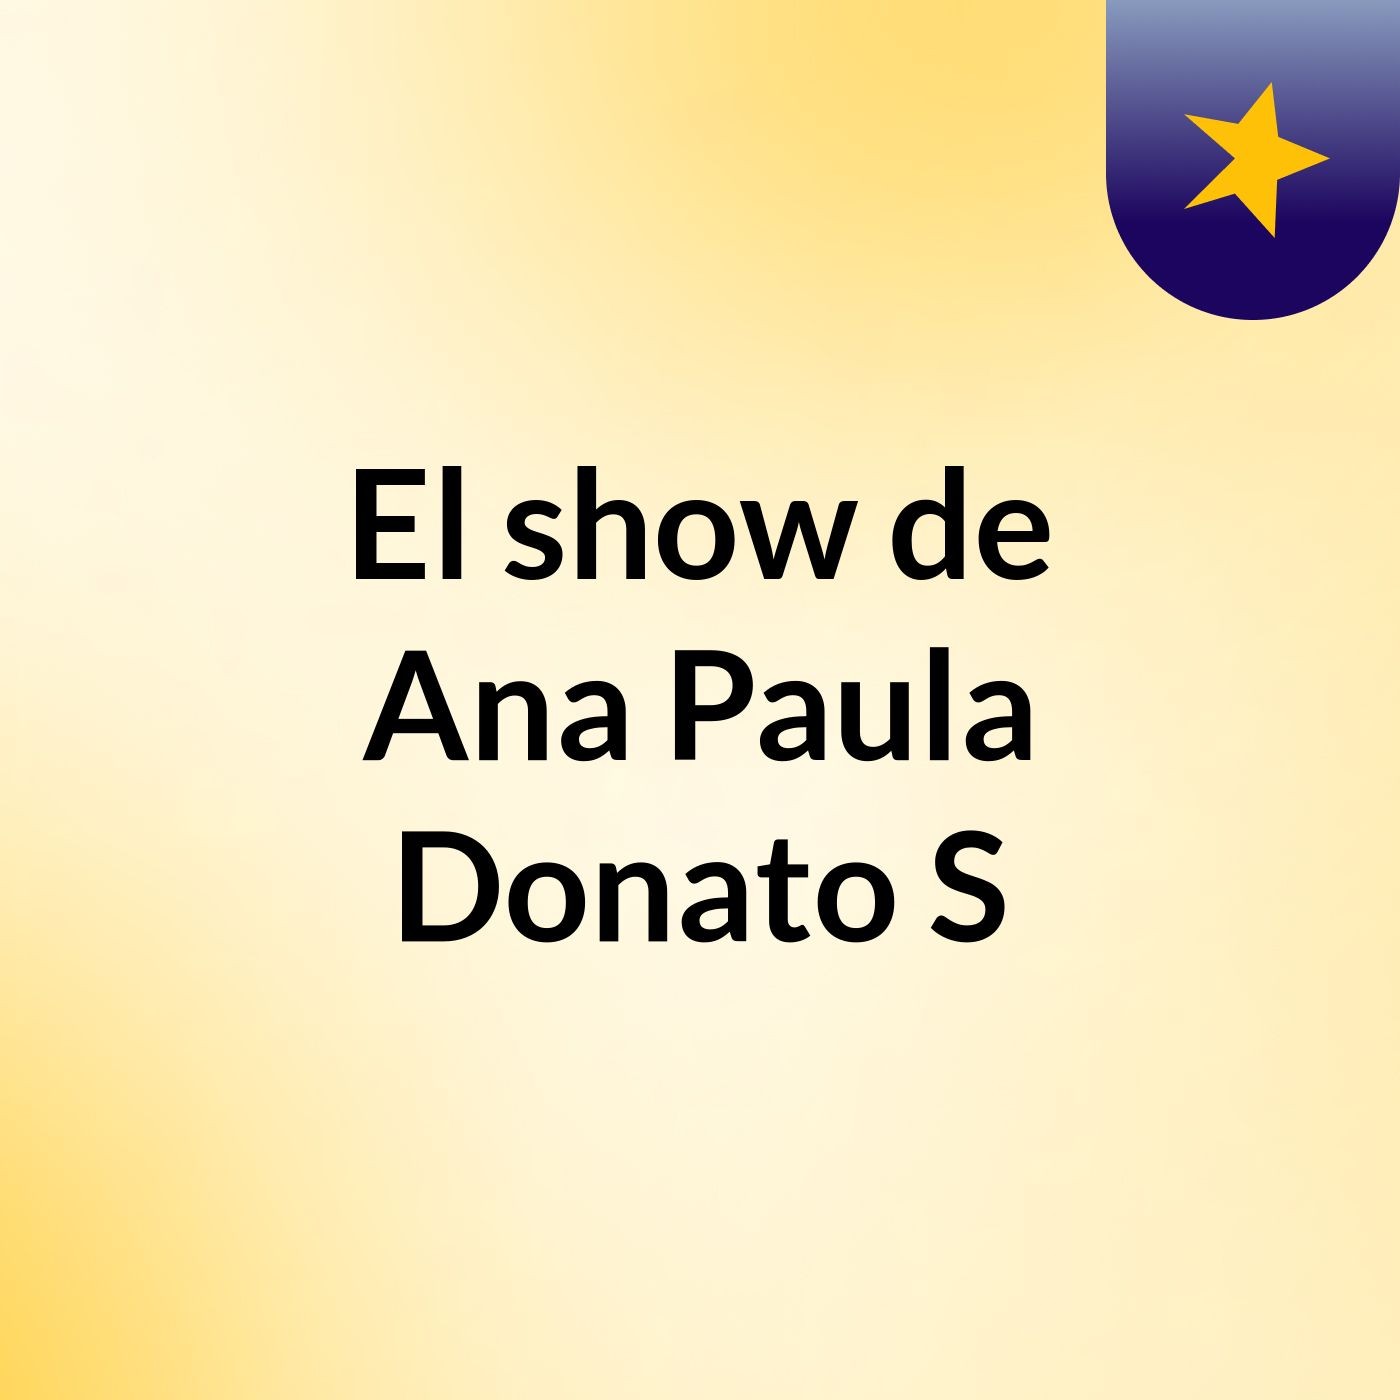 El show de Ana Paula Donato S